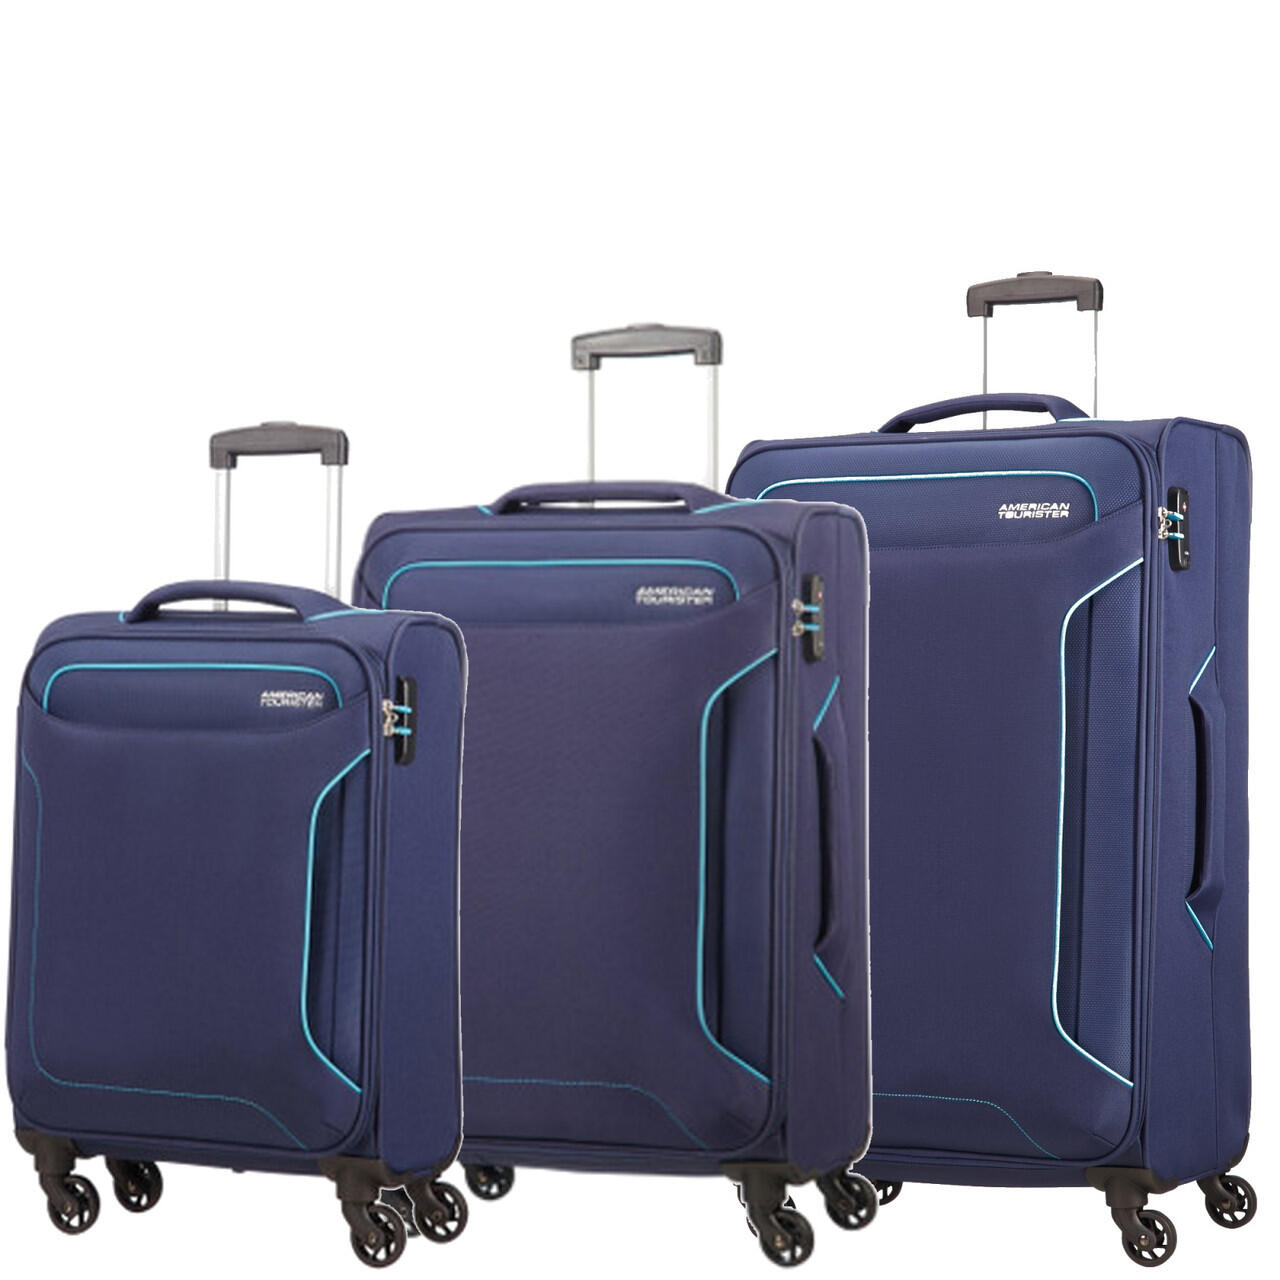 AMERICAN TOURISTER Holiday Heat 3 Piece Luggage Set - 55cm, 67cm & 79cm - Navy